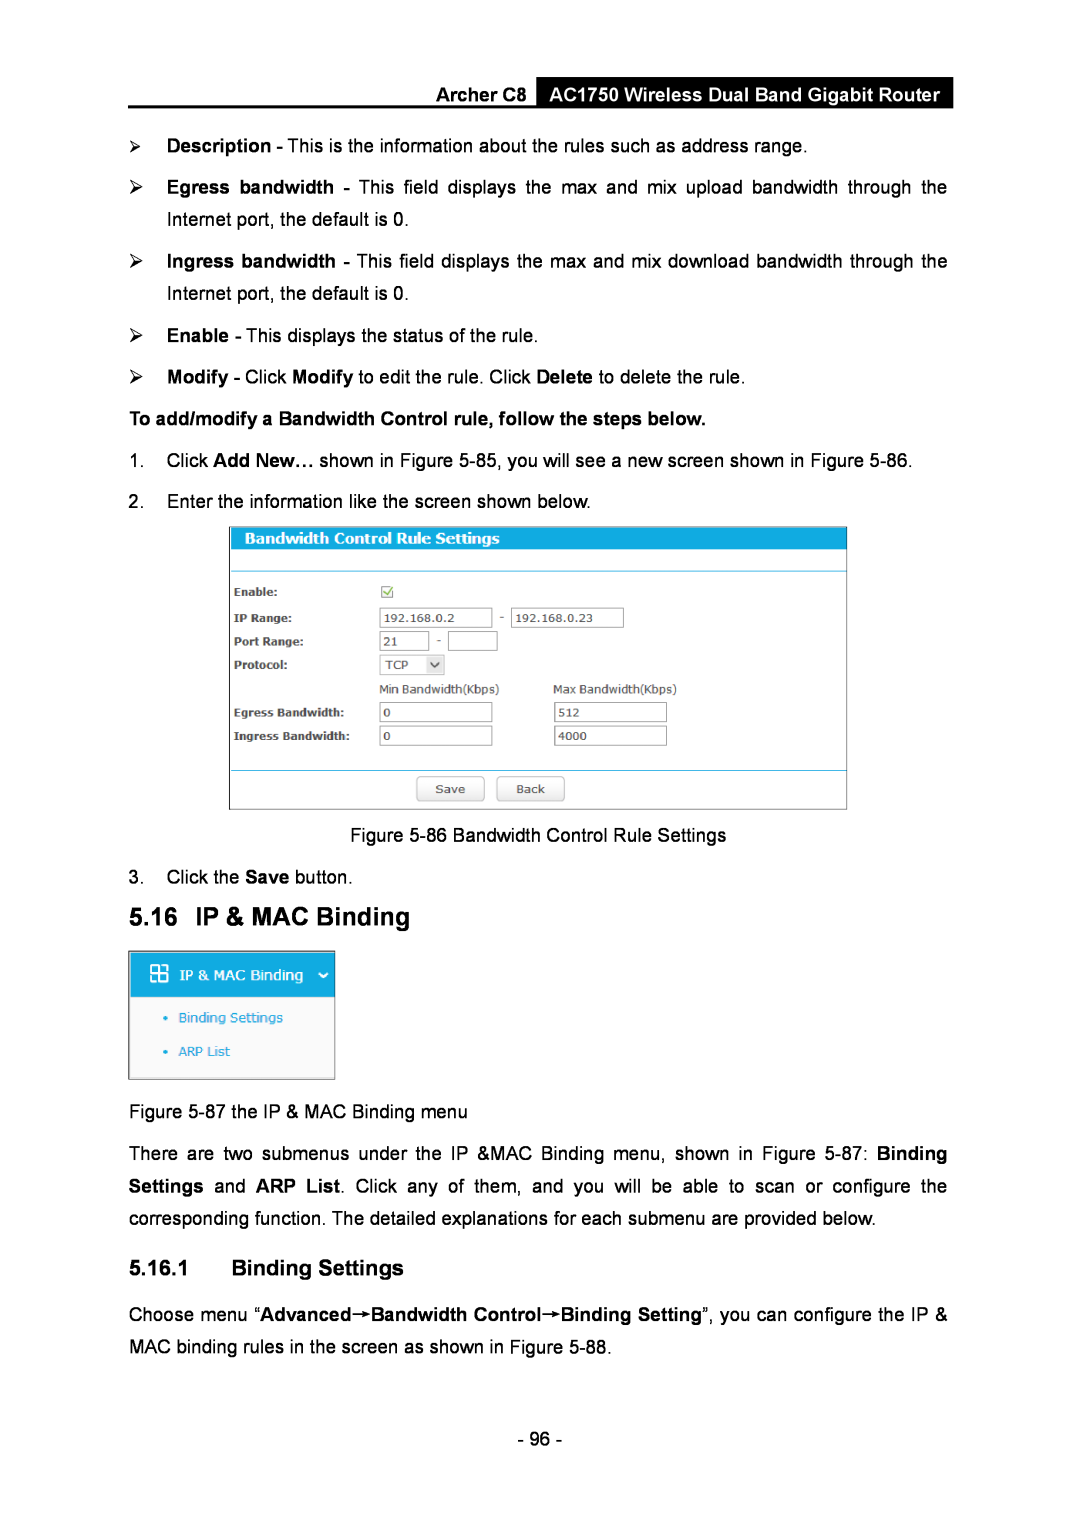 TP-Link manual 5.16 IP & MAC Binding, Binding Settings, Archer C8 AC1750 Wireless Dual Band Gigabit Router 